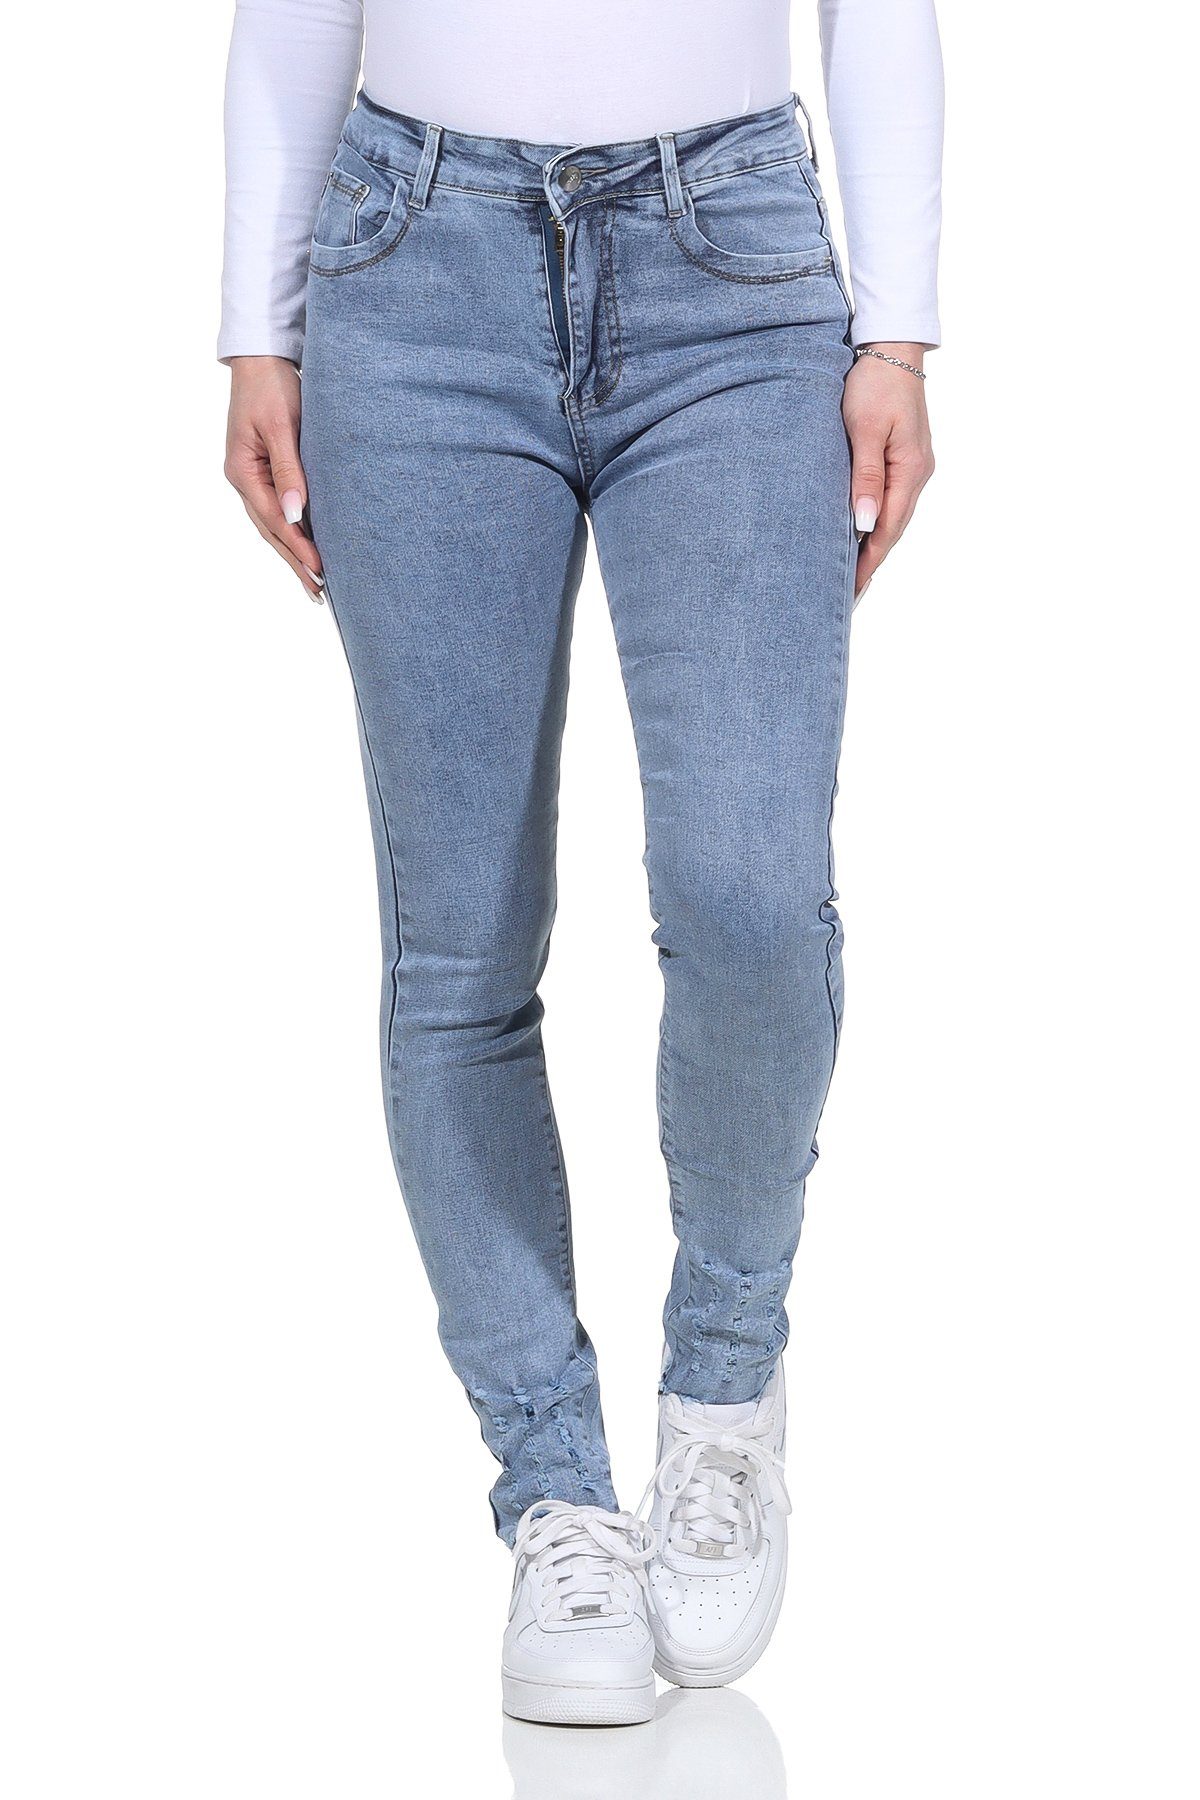 Destroyed Damen 5-Pocket-Jeans Look Hellblau Jeans Aurela Stretch moderner Jeanshosen für Distressed Damenmode Look